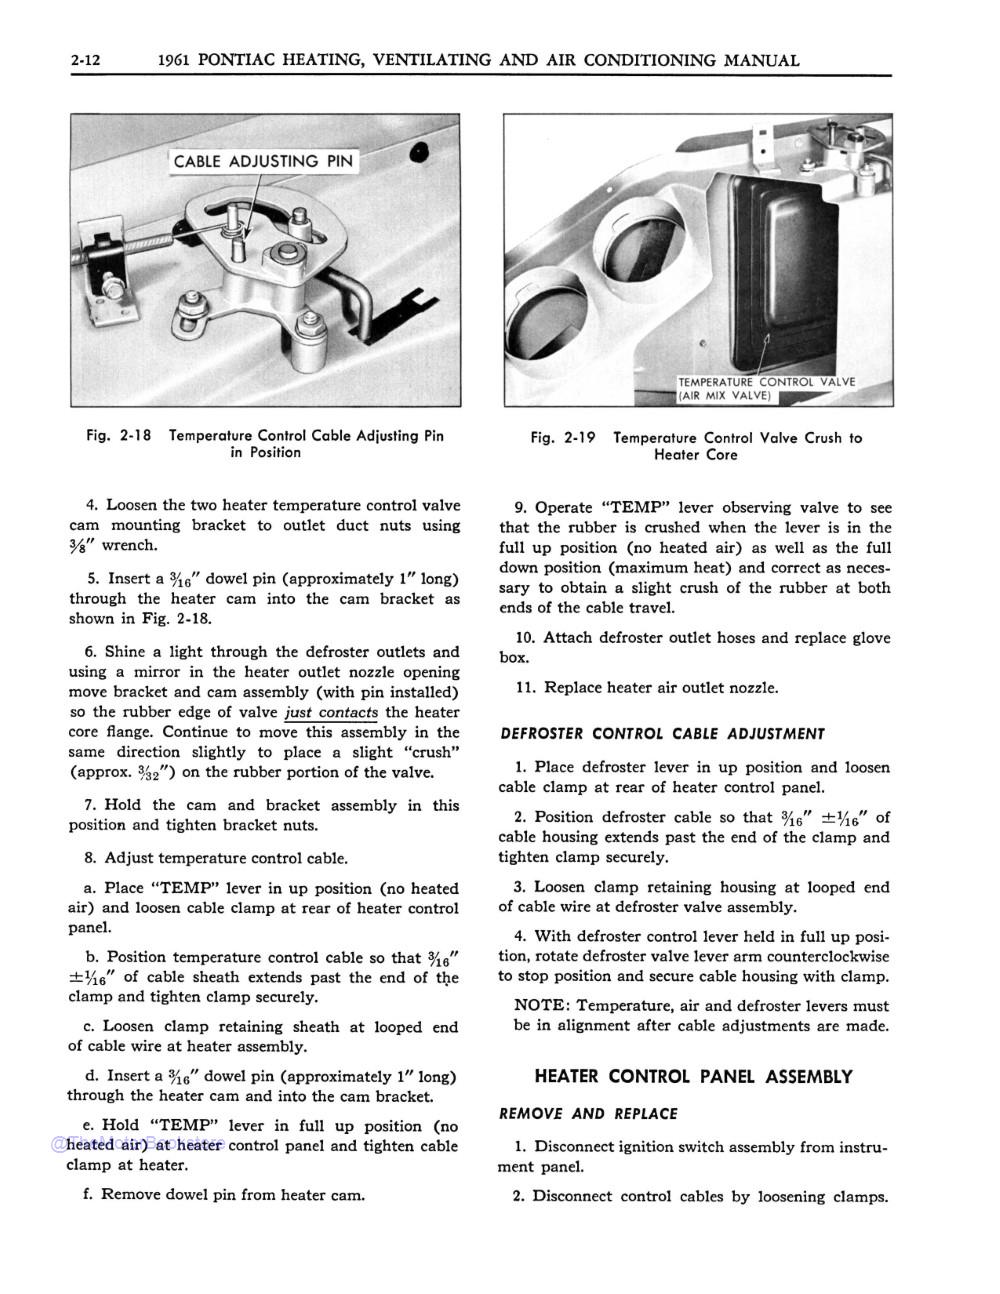 1961 Pontiac HVAC Manual - Sample Page 1